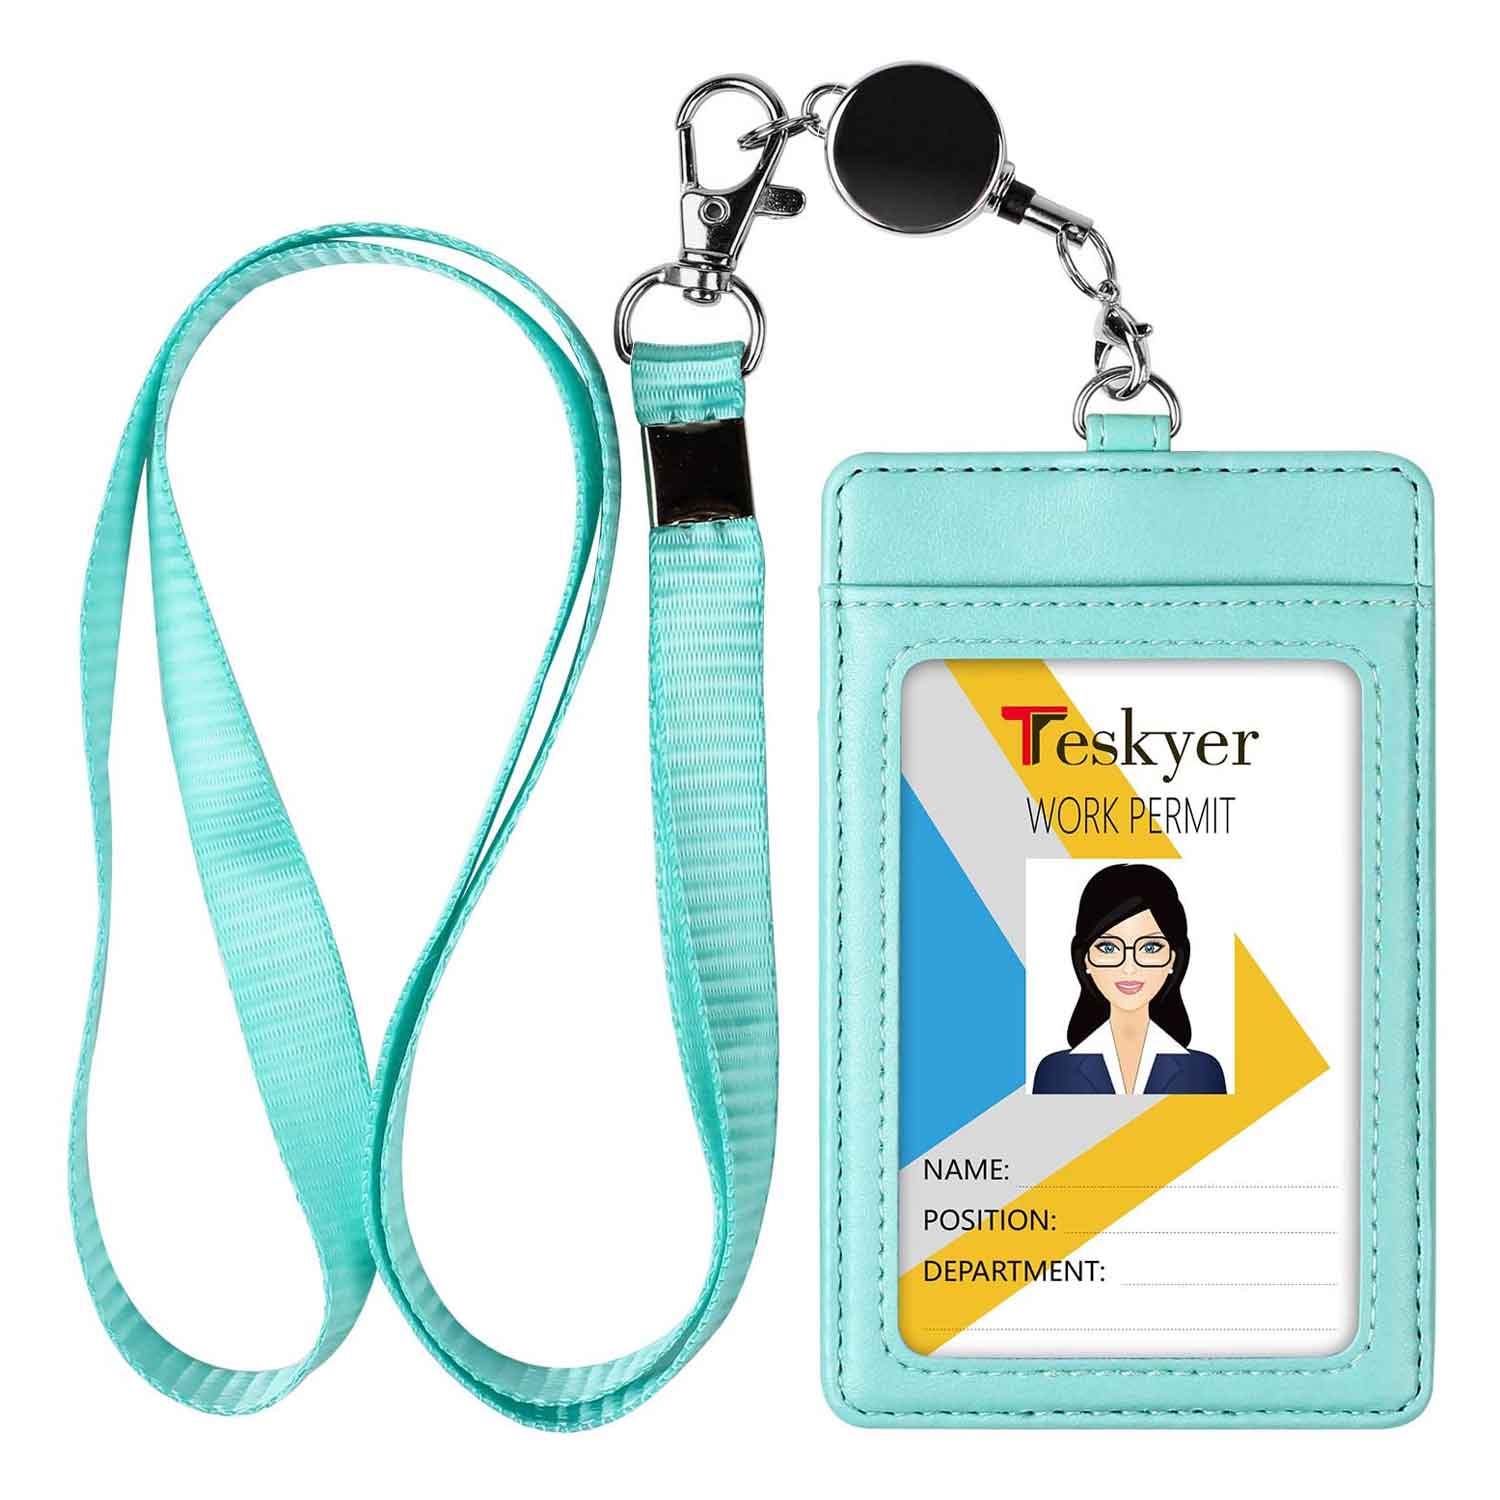 Badge Holder with Zipper, EEEkit PU Leather ID Badge Card Holder